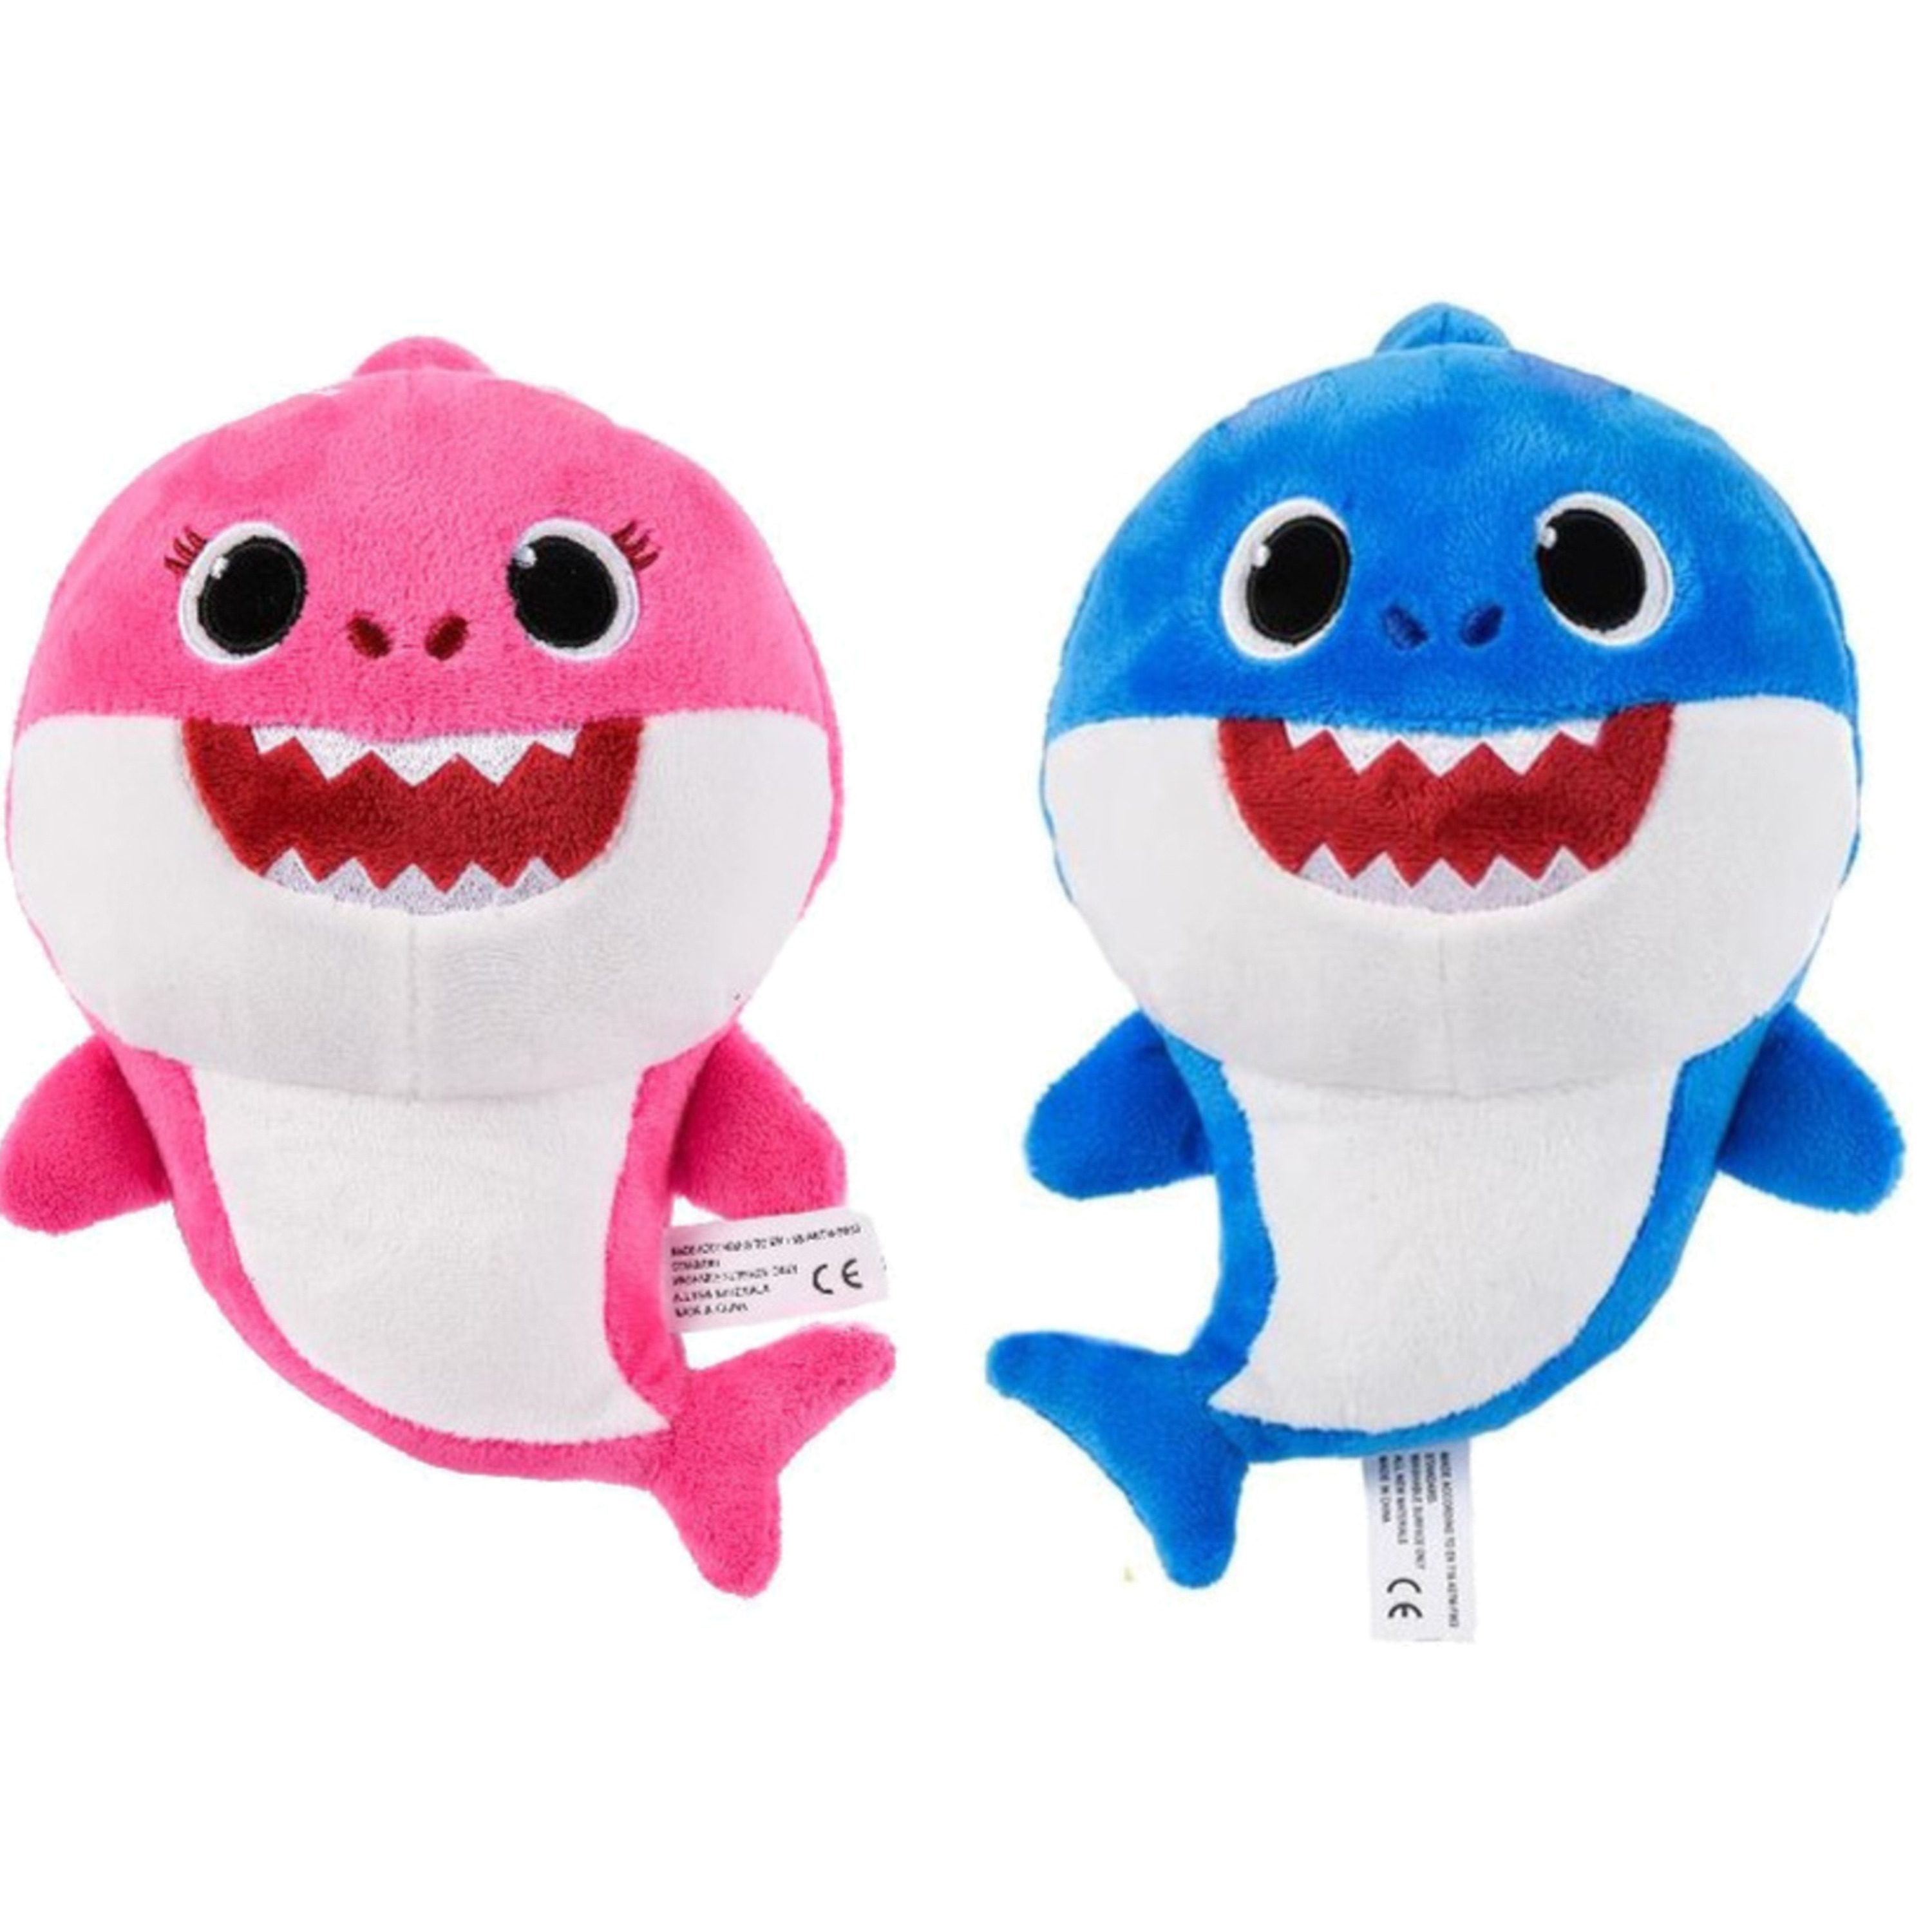 Baby Shark pluche knuffel set van 2x karakters daddy-mommy 20 cm -